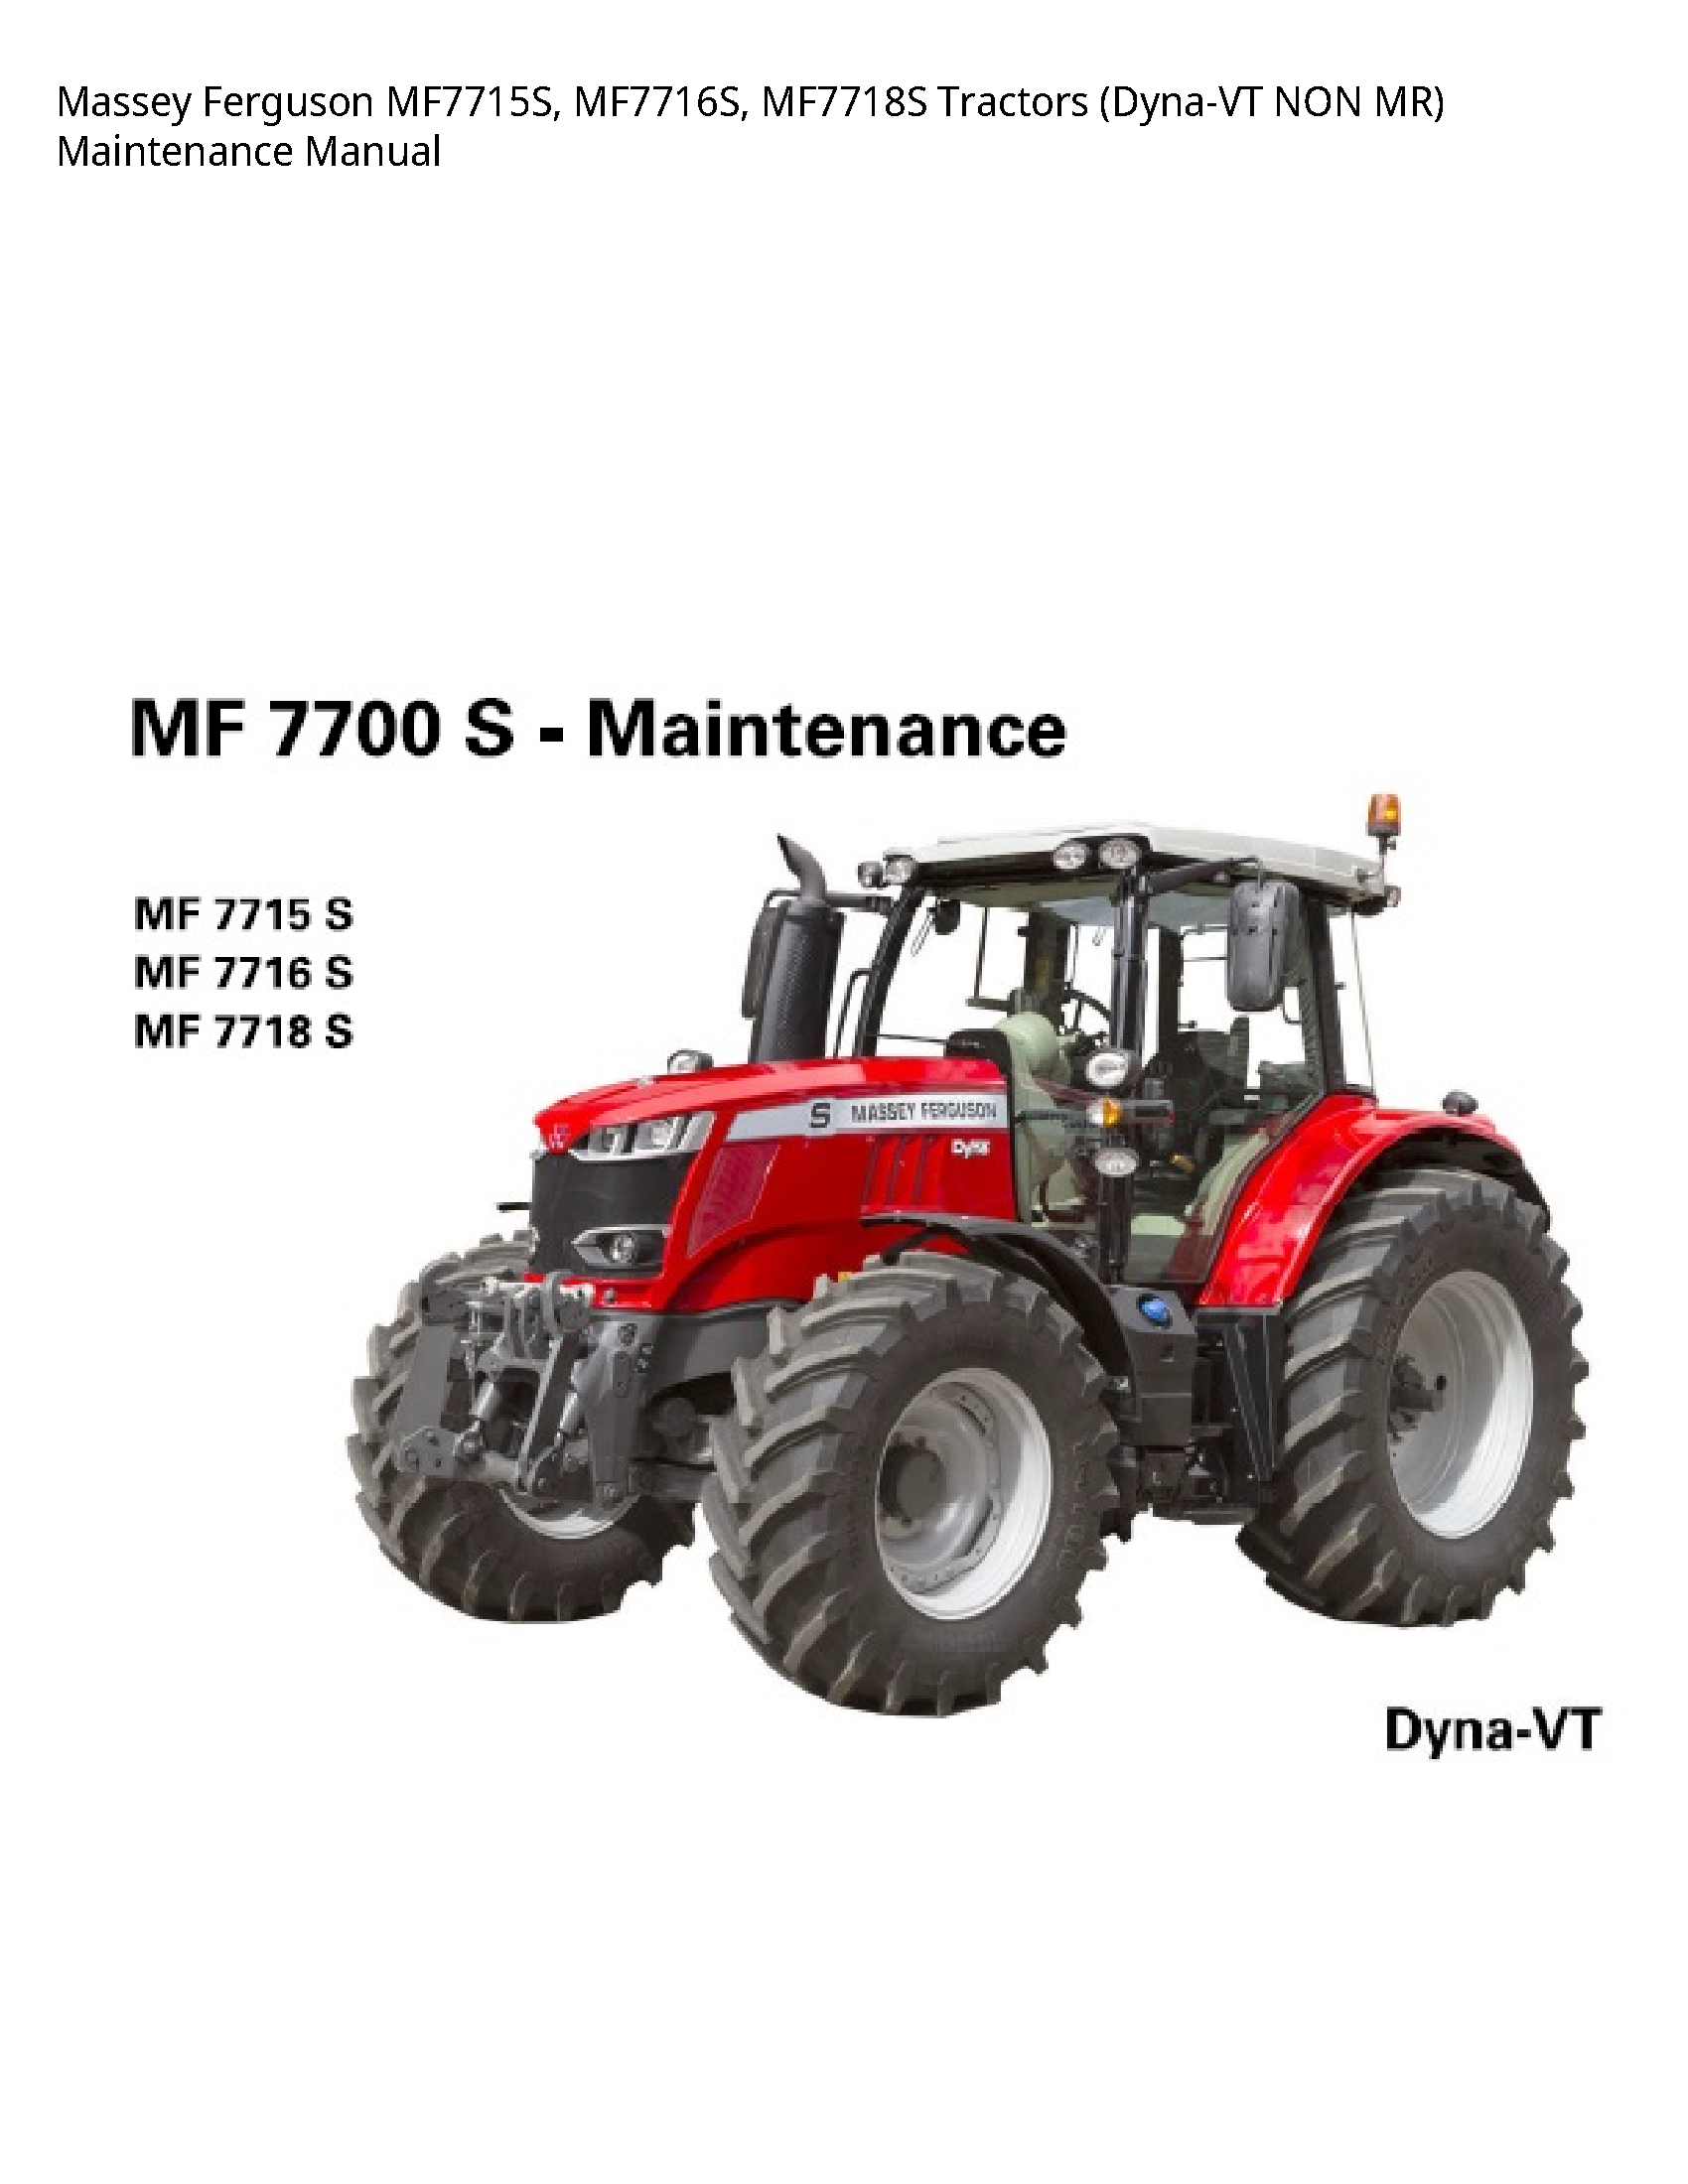 Massey Ferguson MF7715S Tractors (Dyna-VT NON MR) Maintenance manual